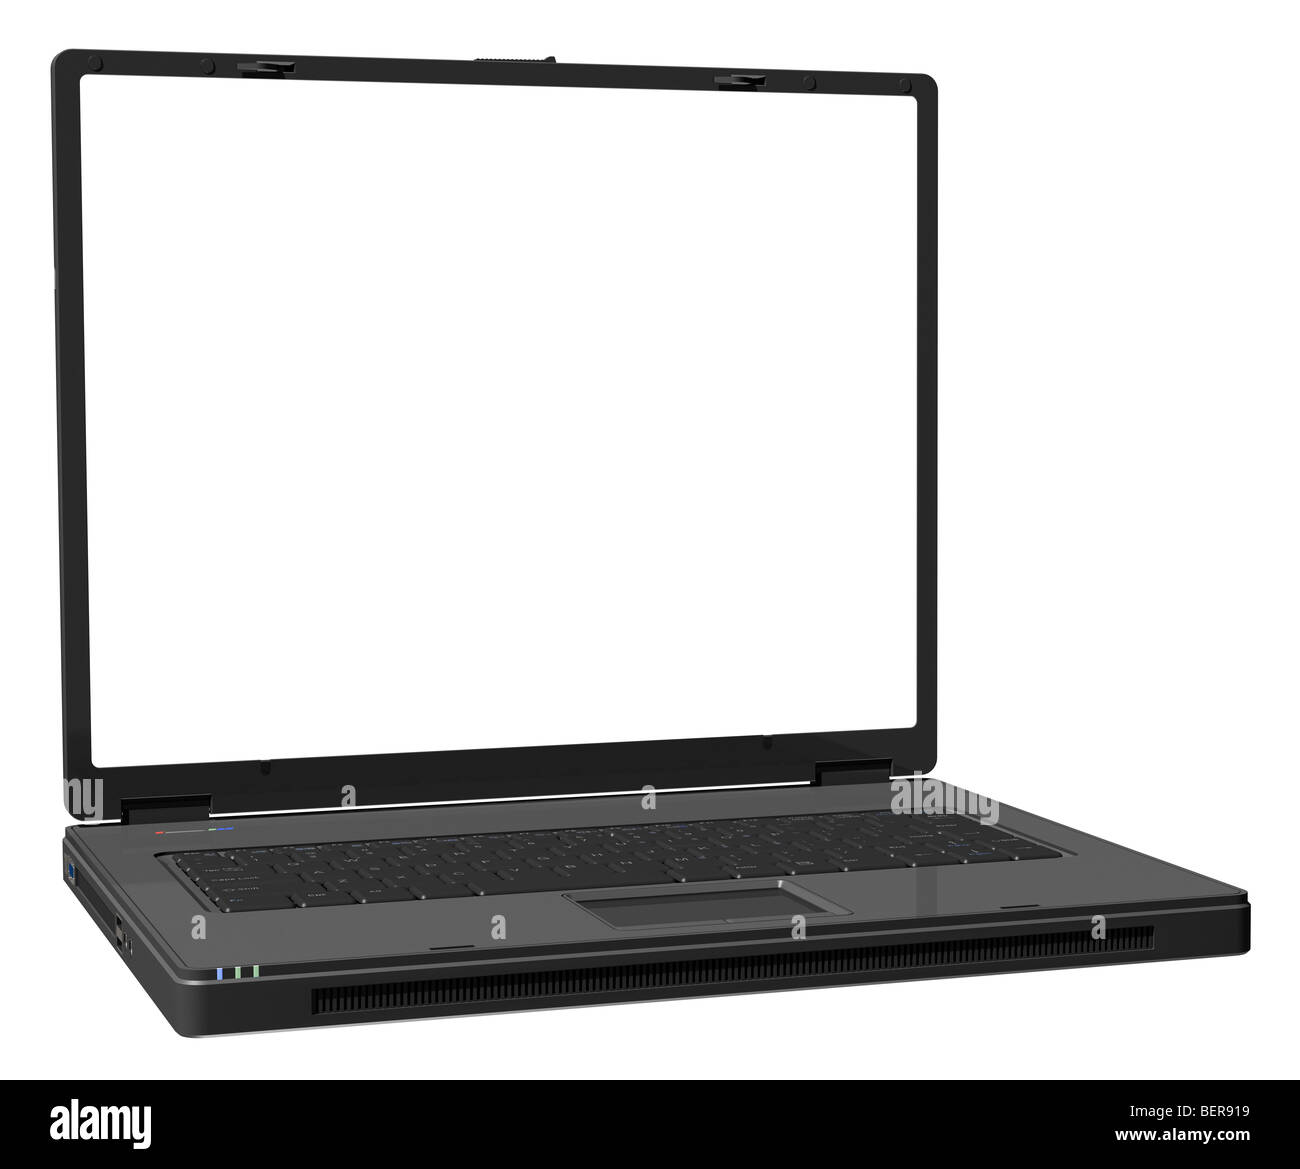 Isolated black laptop on a white background Stock Photo